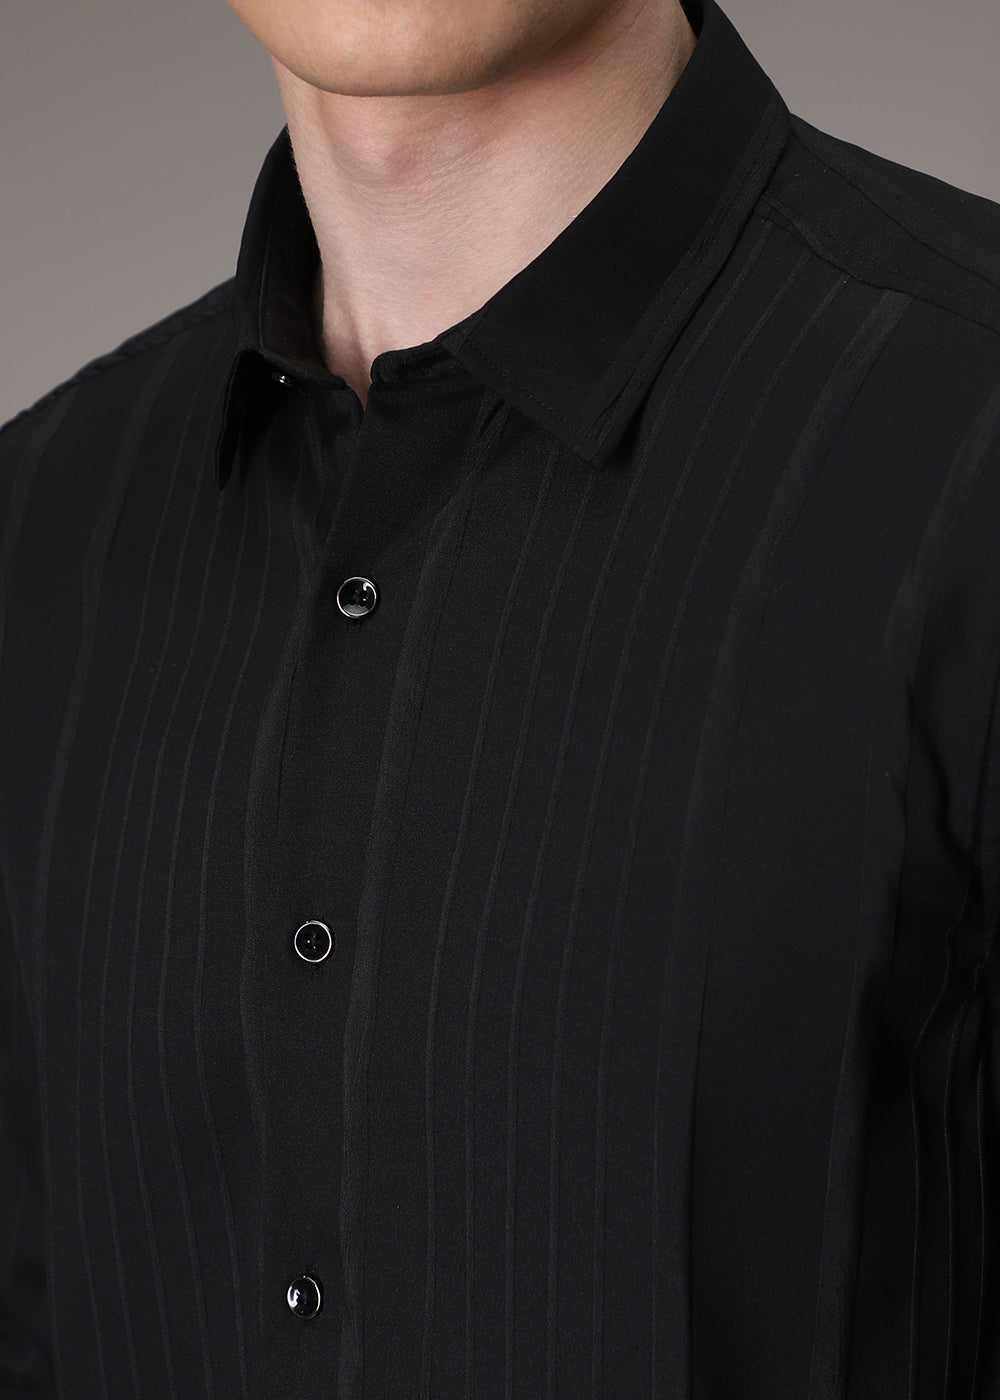 Black Pleat Designer Shirt